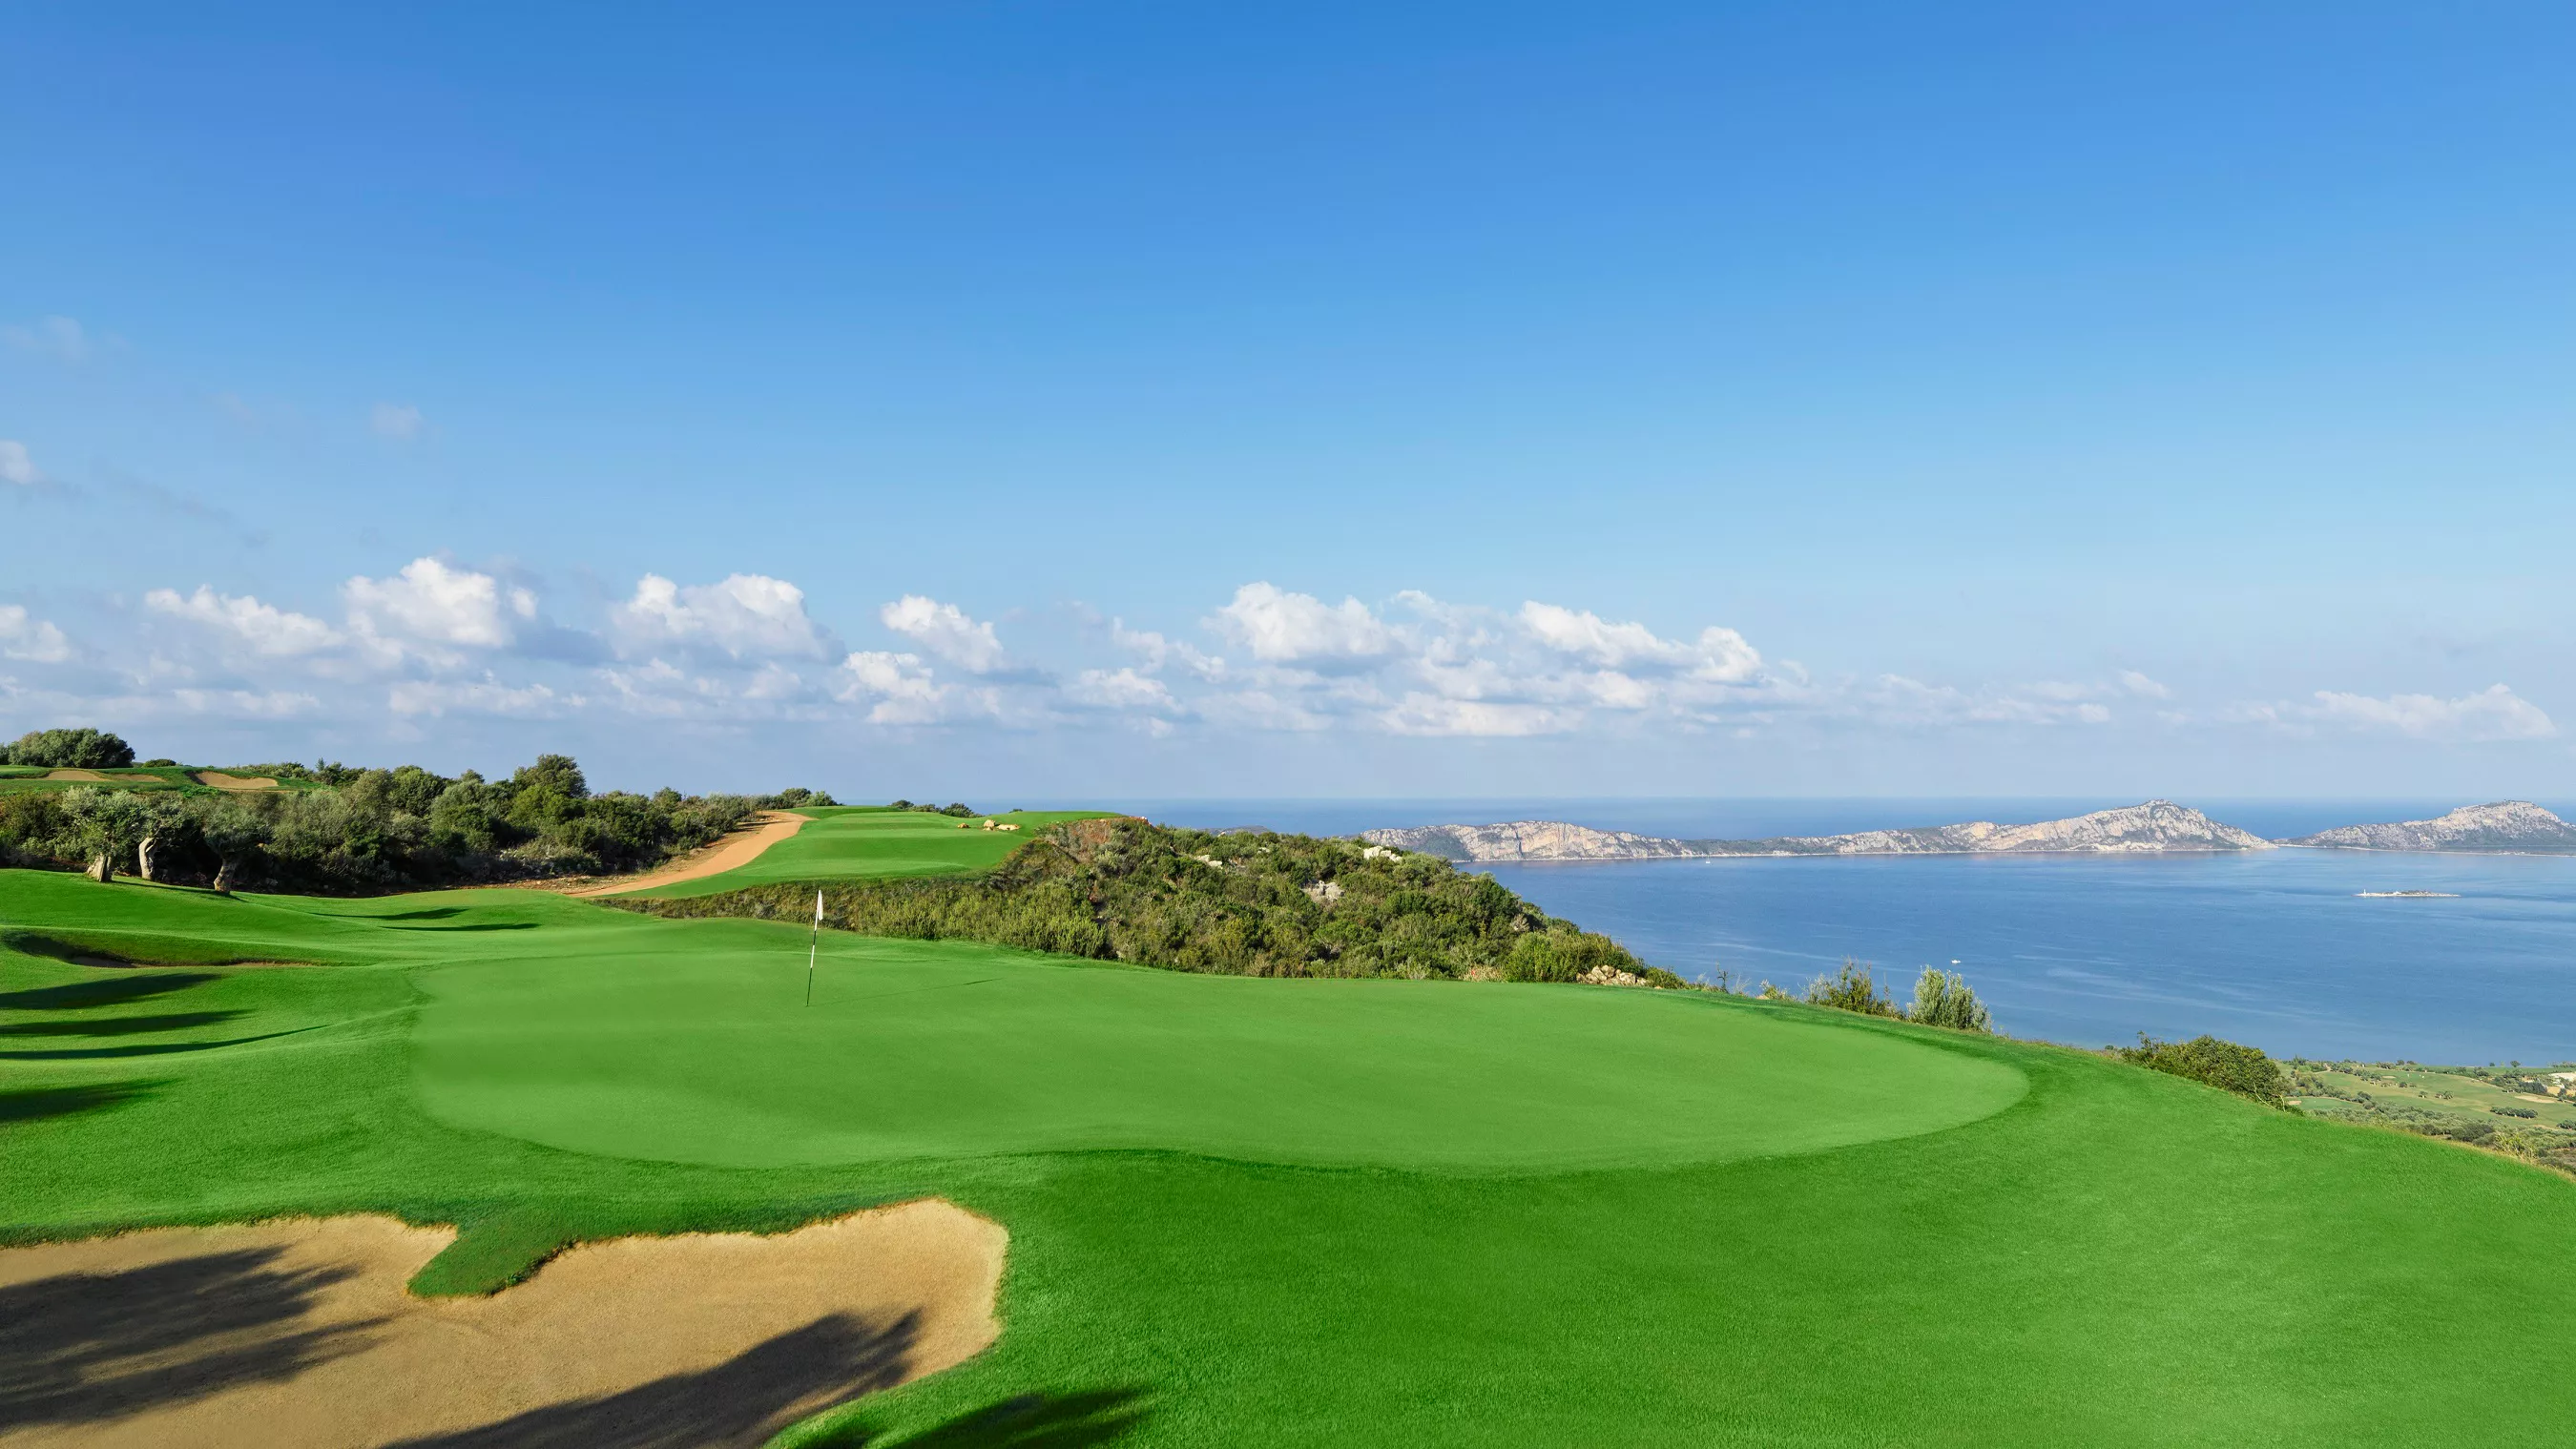 Golf Academy Costa Navarino in Cyprus, Europe | Golf - Rated 0.9